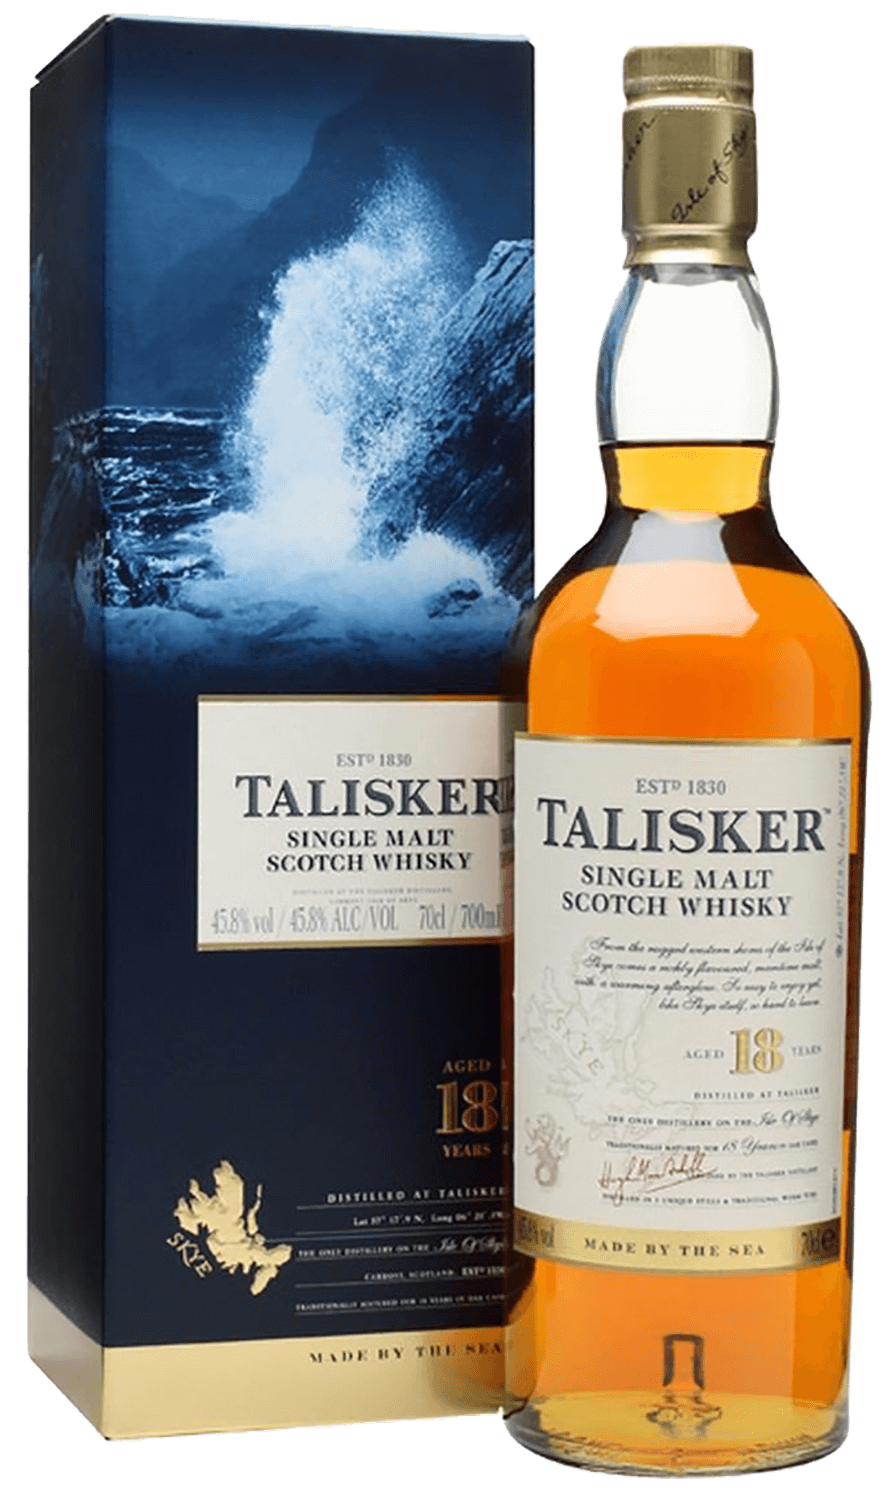 Talisker 18 Years Old Single Malt Scotch Whisky (gift box) glenfiddich 18 years old single malt scotch whisky gift box